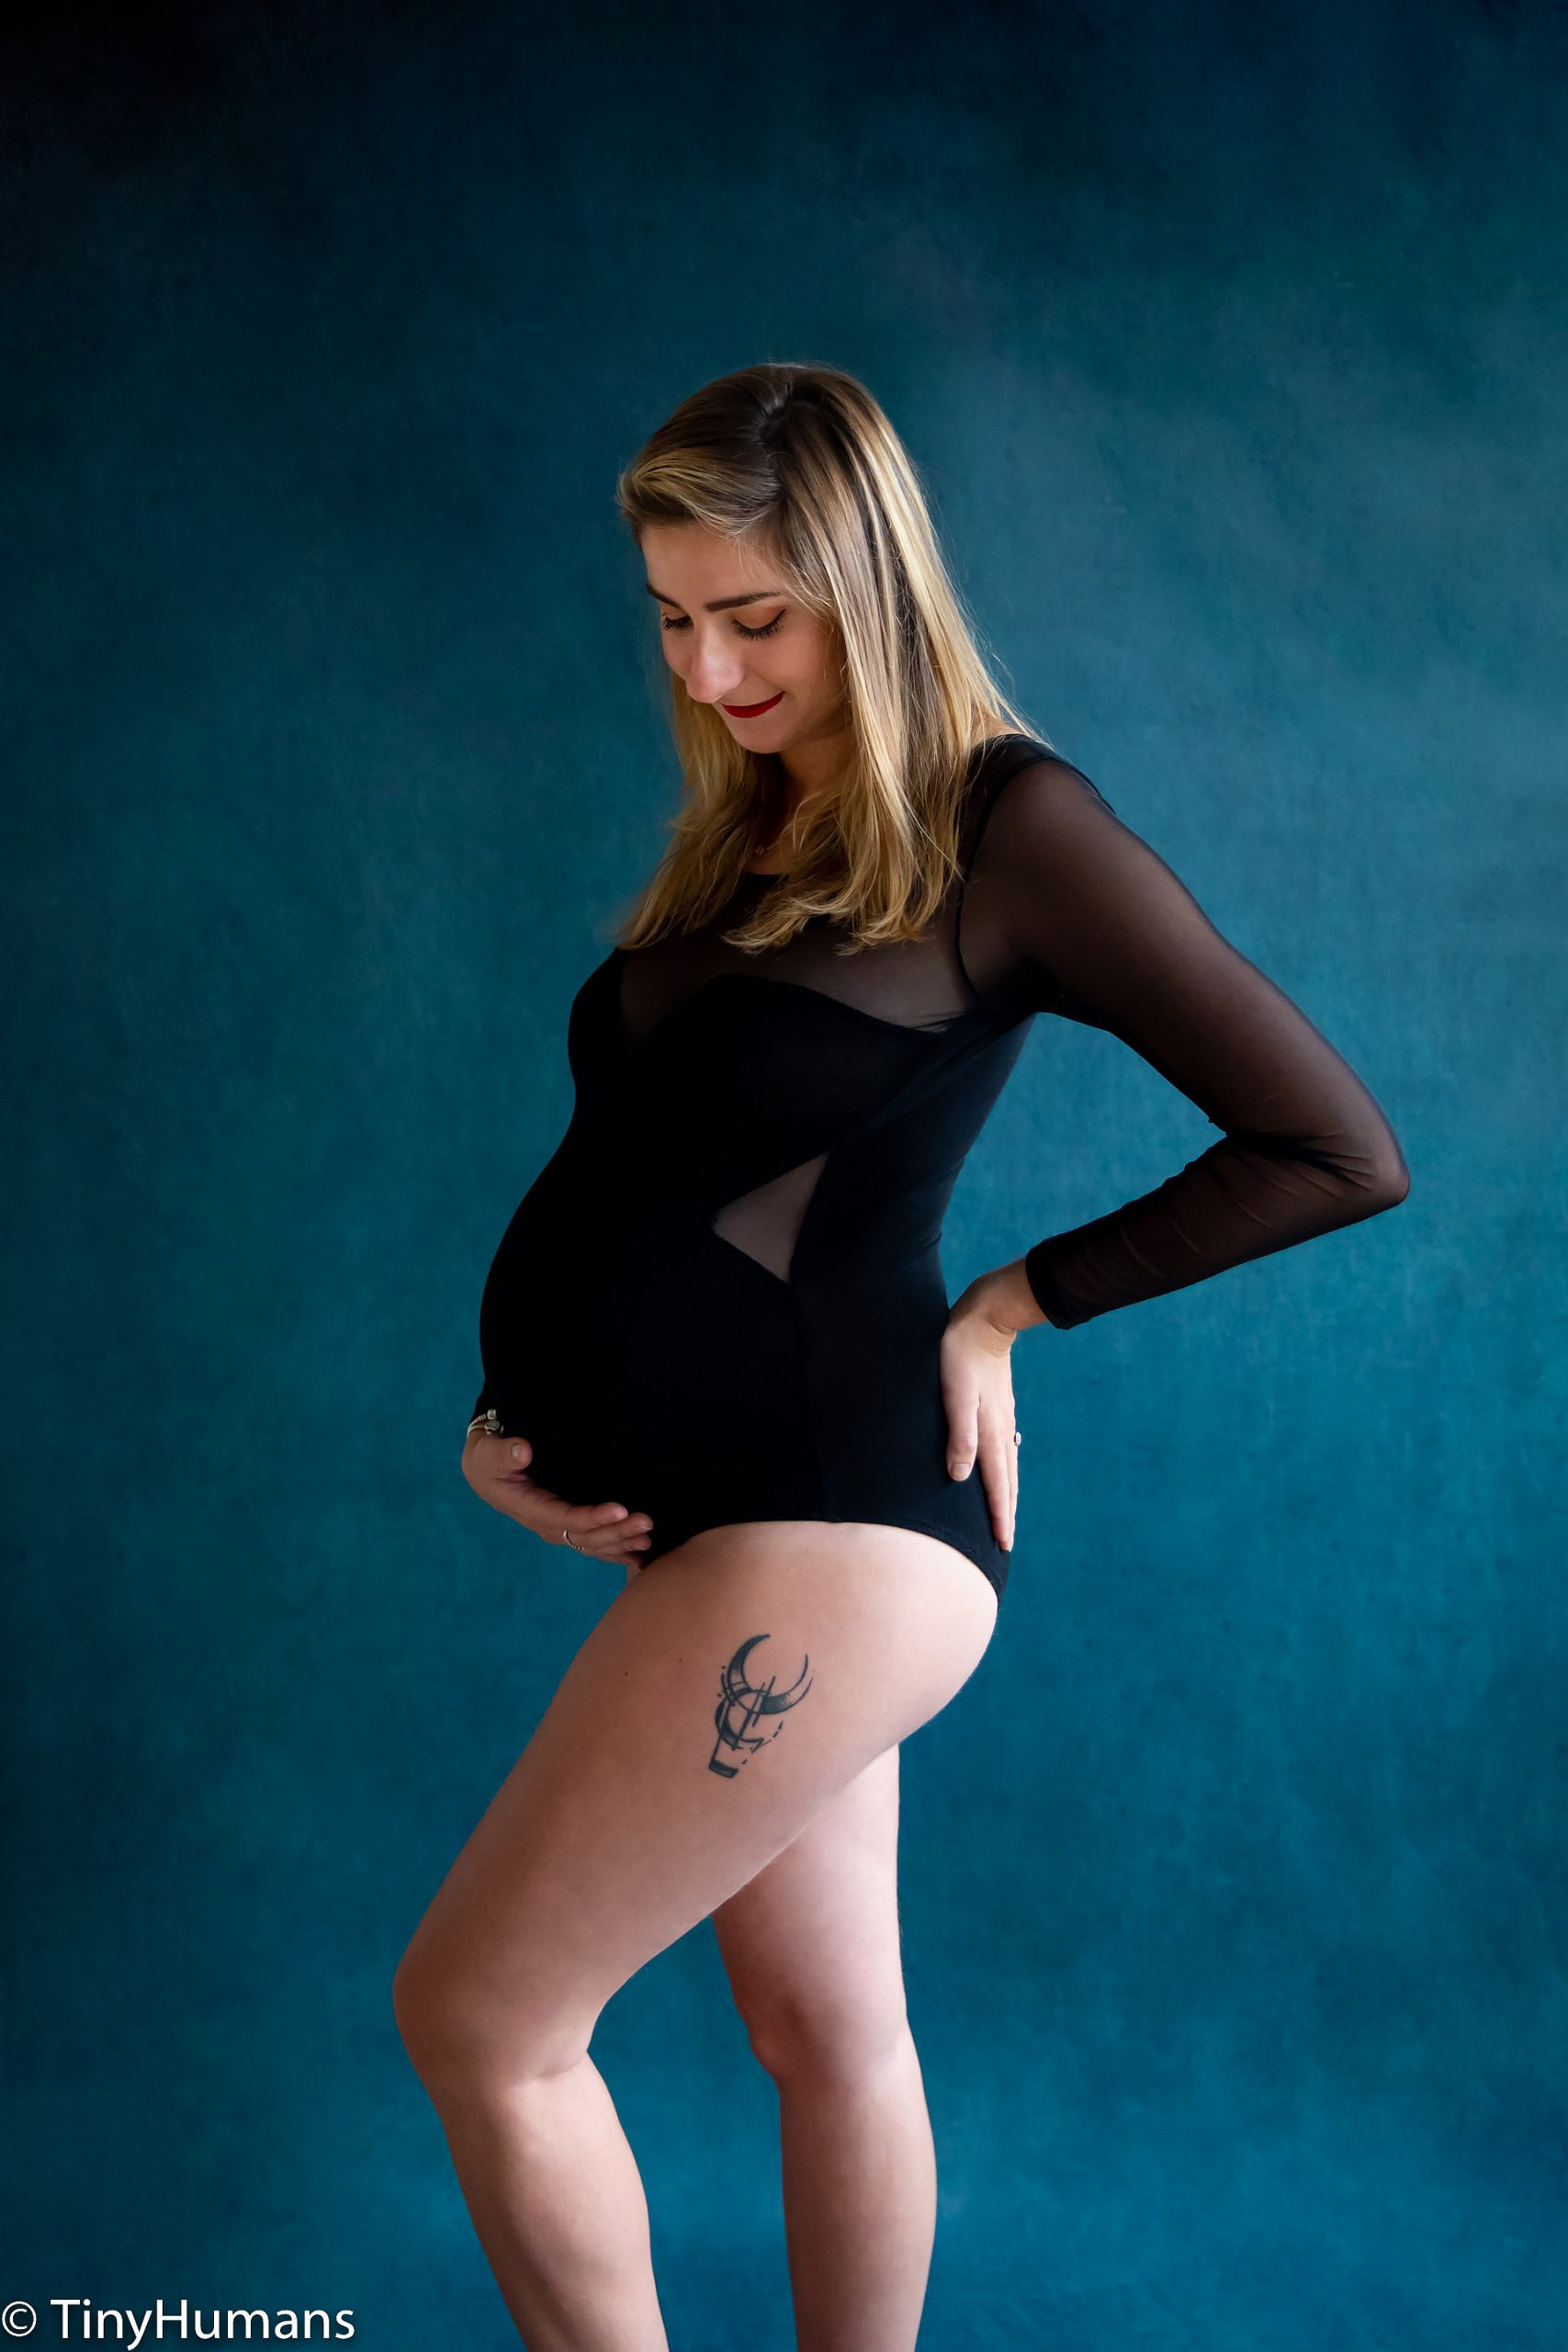 Pregnancy on blue backdrop at 32 weeks